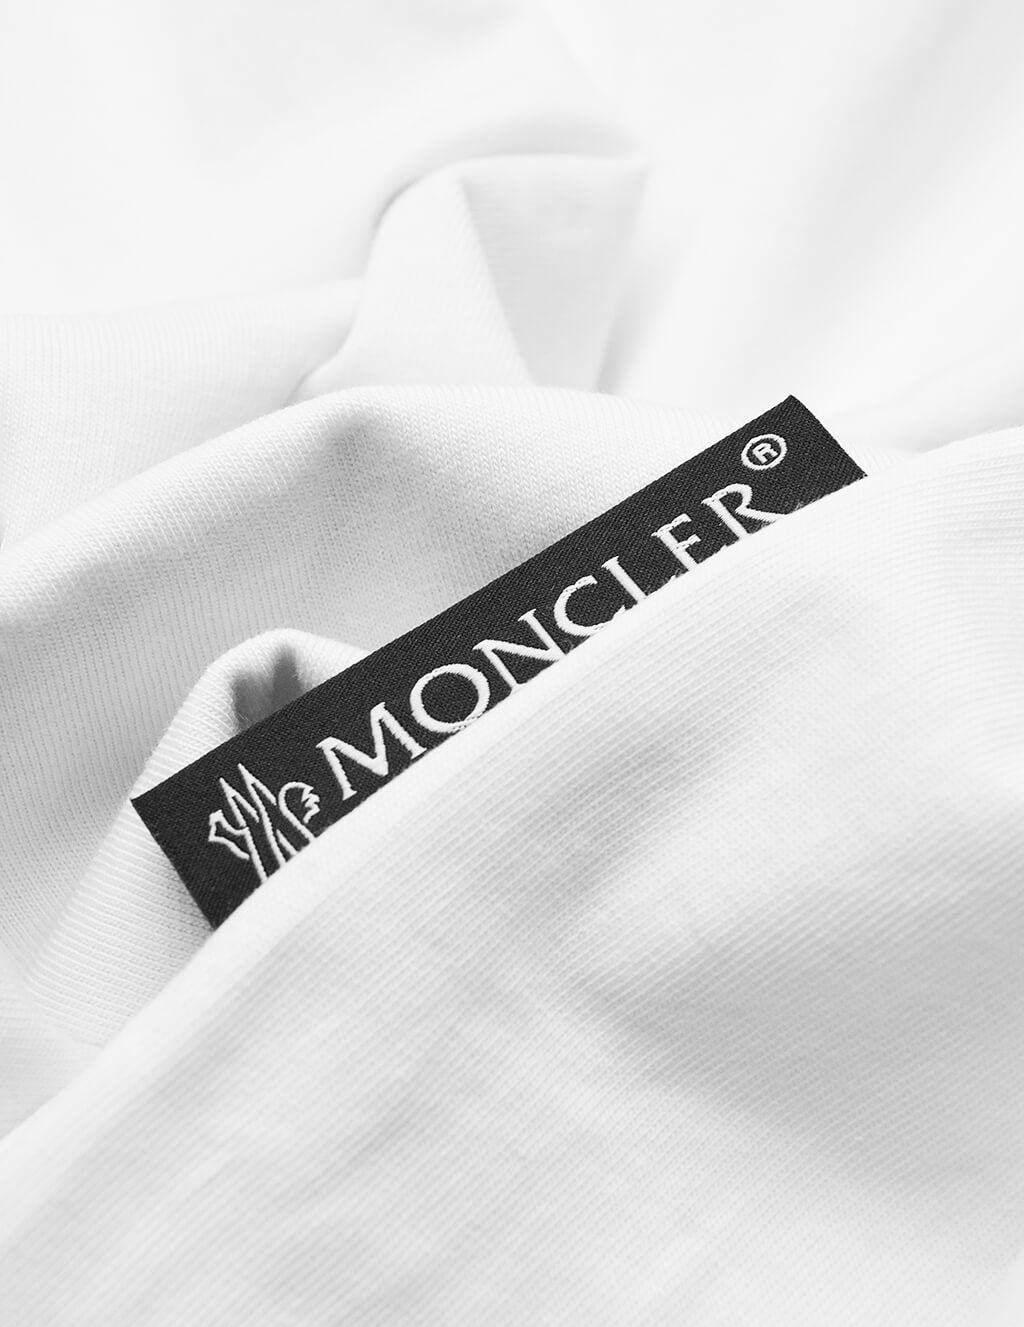 moncler white t shirt women's